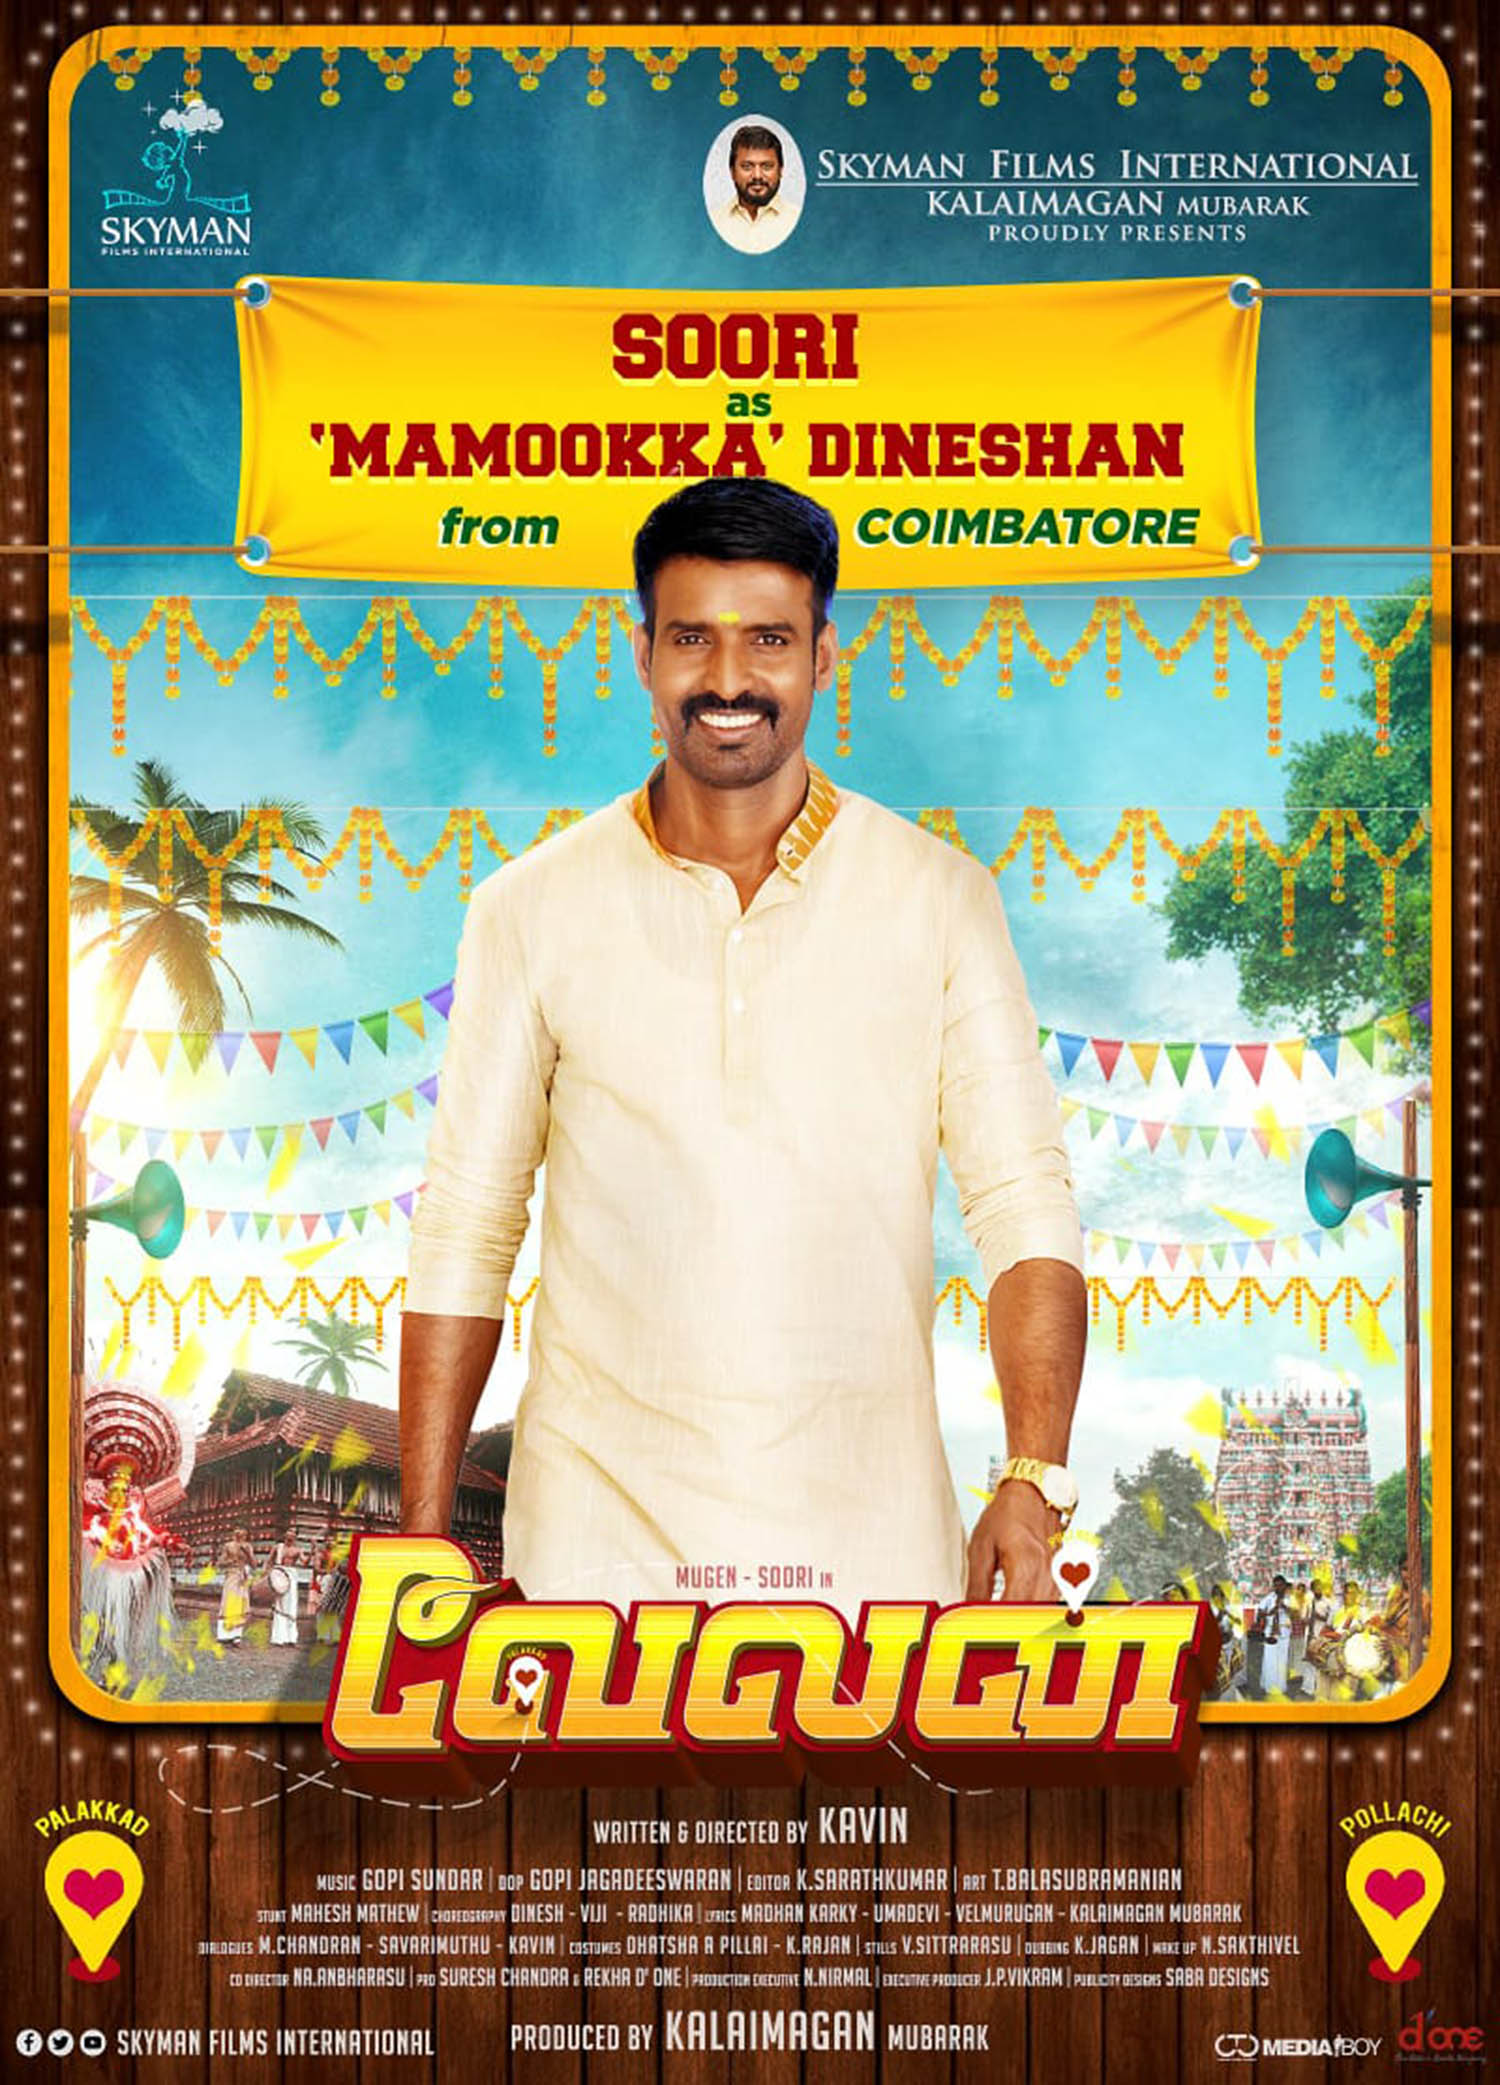 Velan,tamil actor soori,soori,mammootty,latest tamil cinema,soori play mammootty fan,velan soori new film,soori as mammootty fan in new film